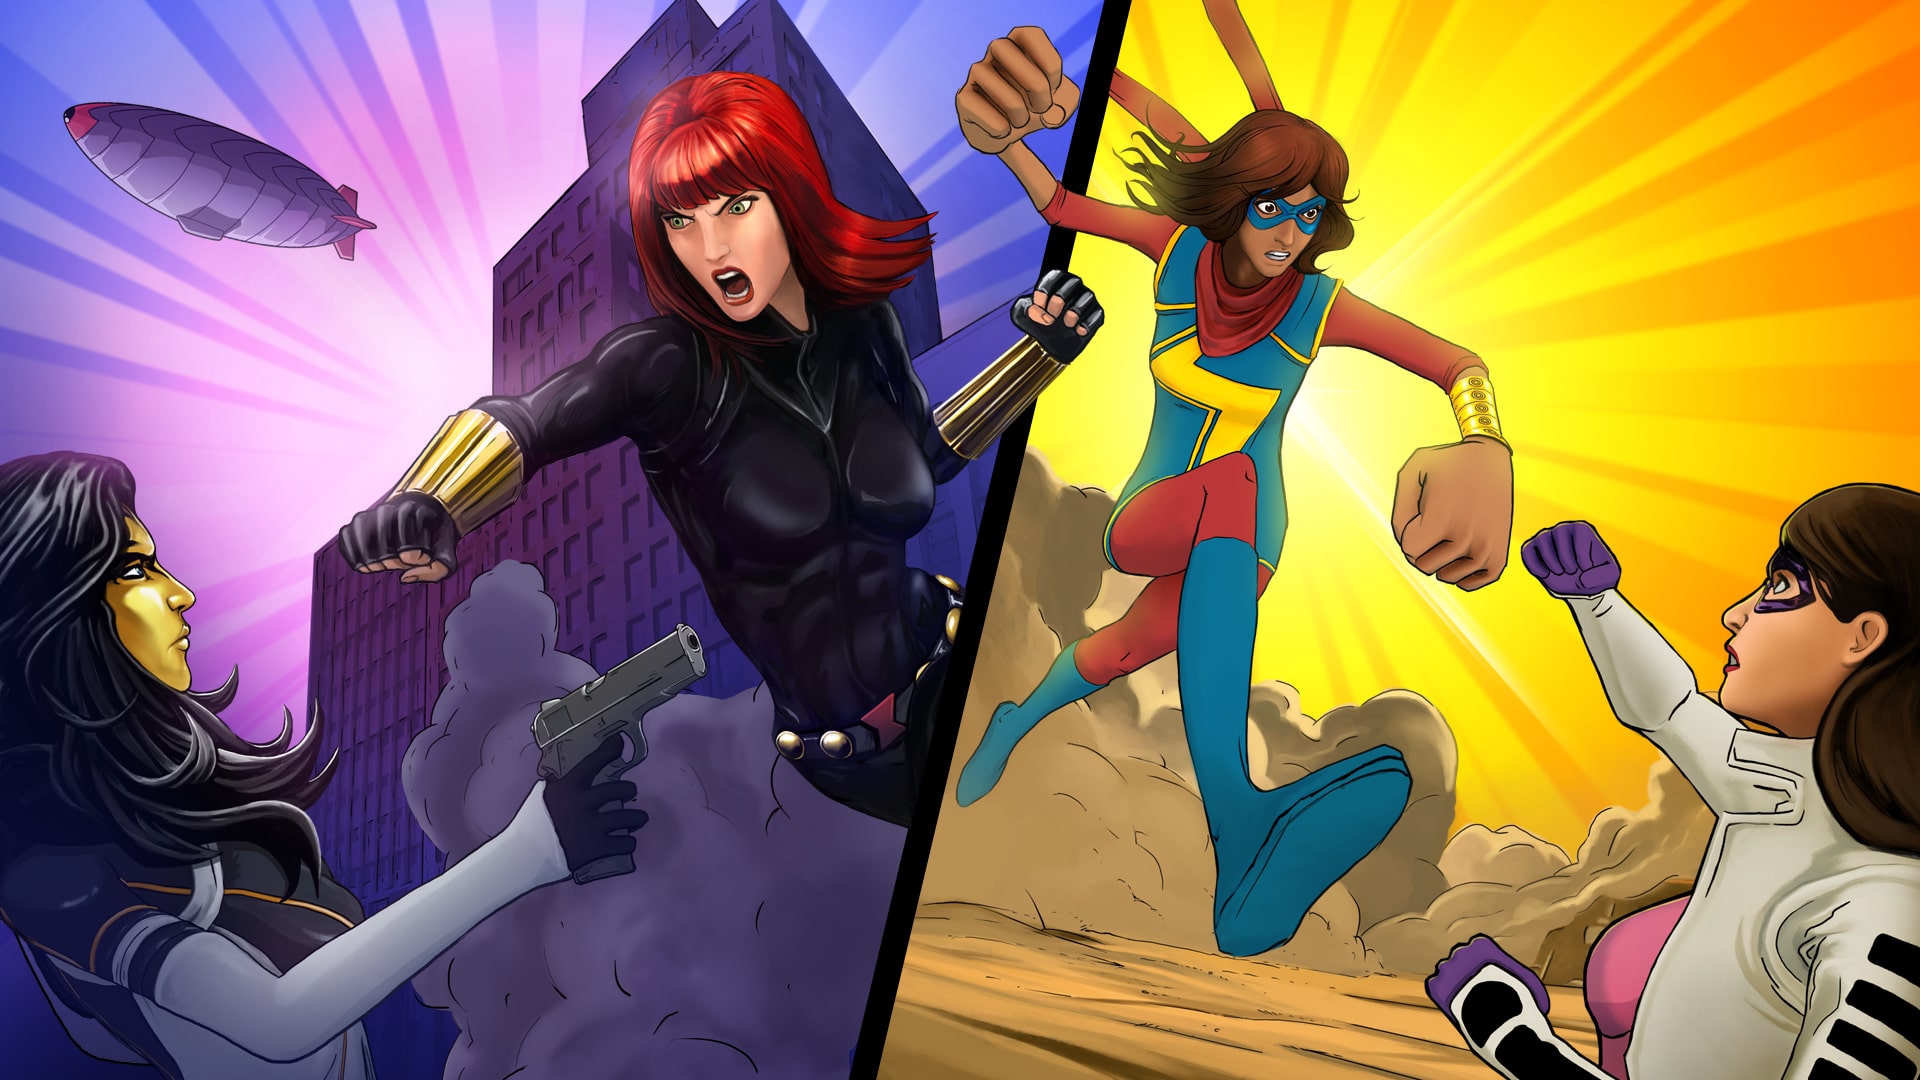 Zen Pinball 2: Marvel's Women of Power